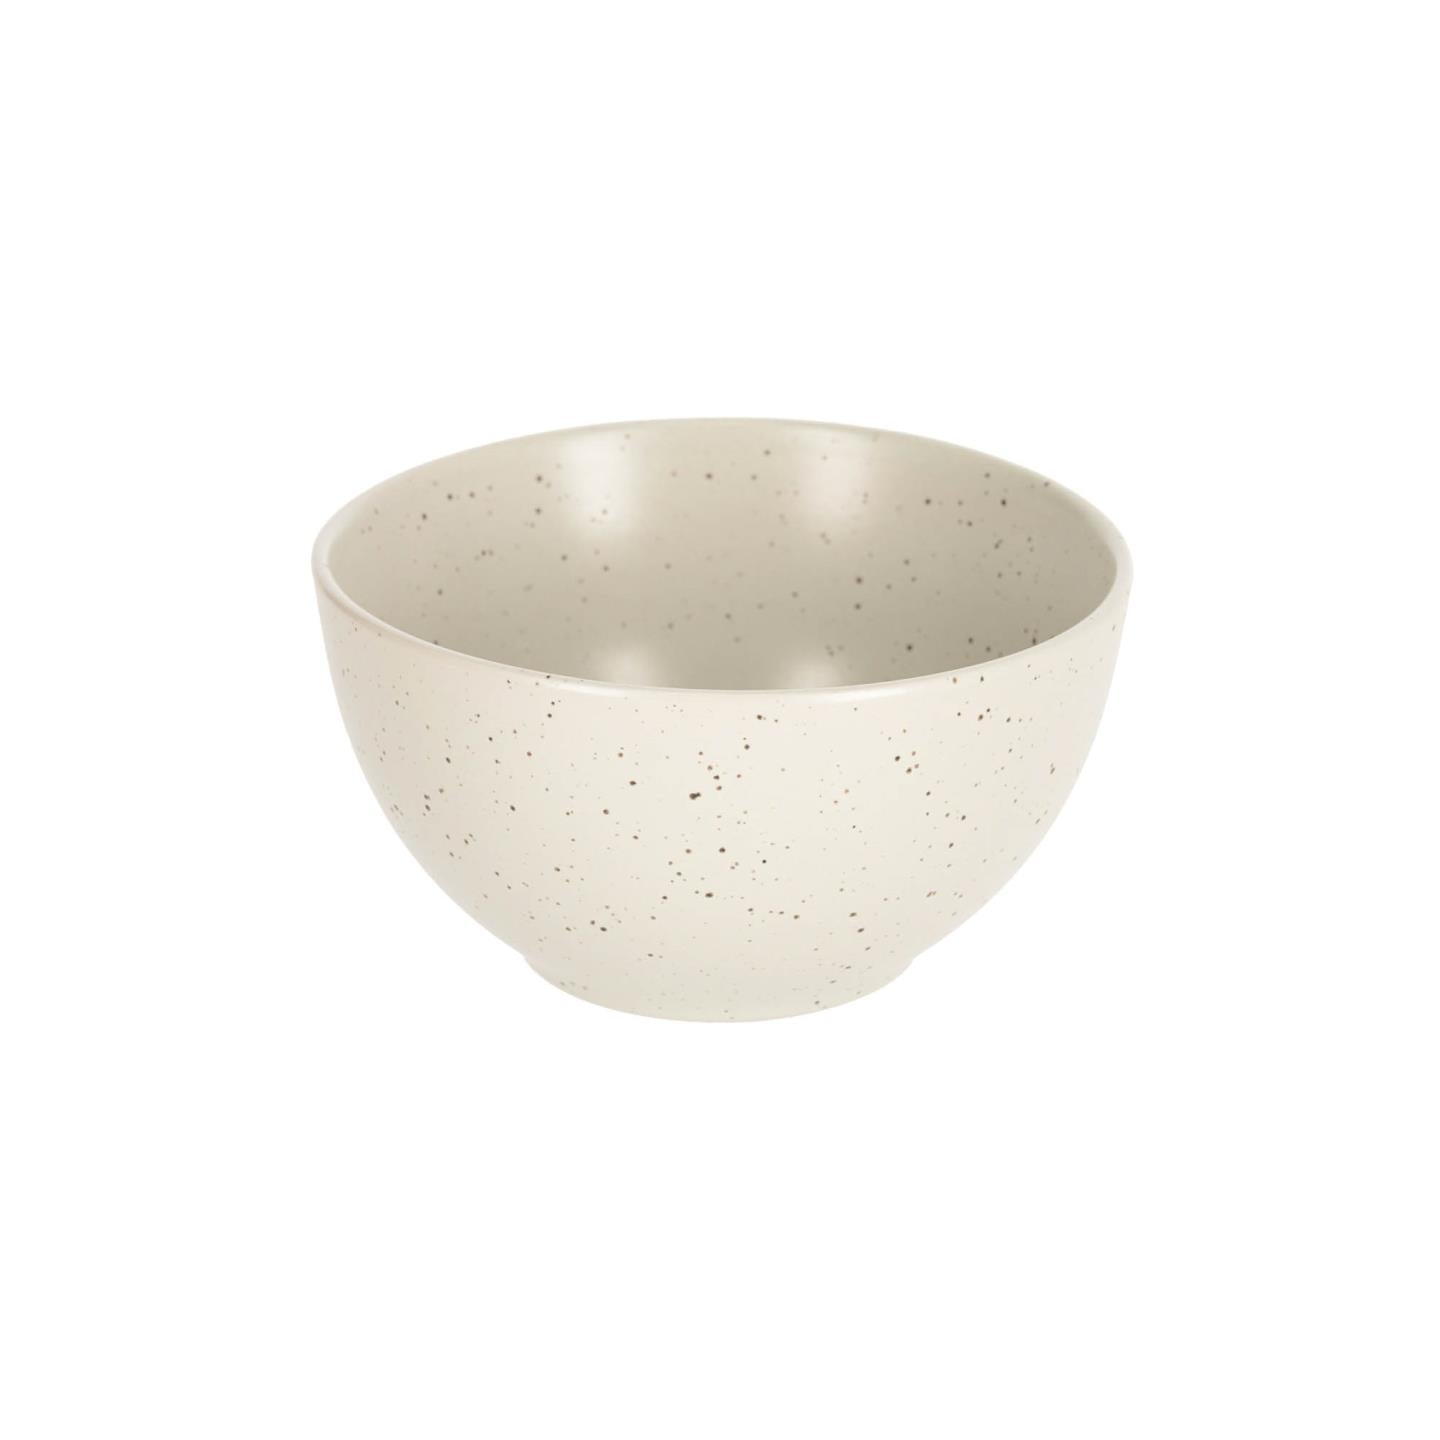 Aratani white bowl